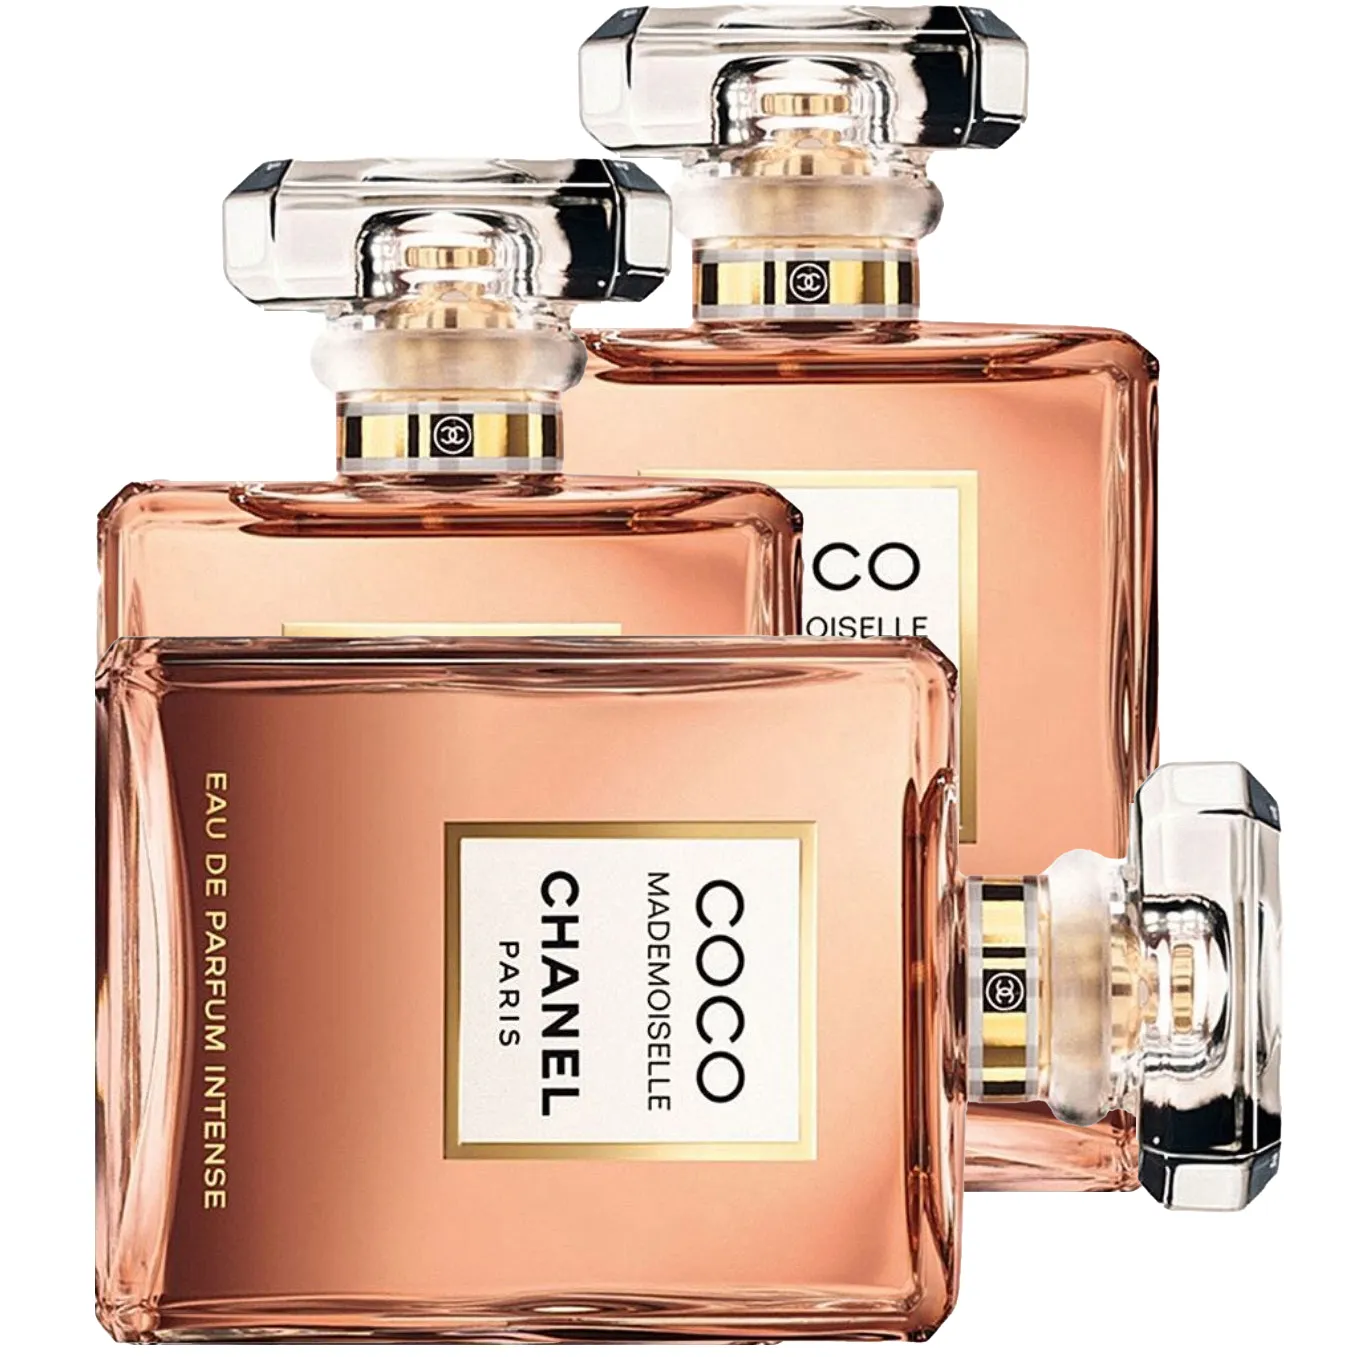 Free Chanel's Coco Mademoiselle Popular Perfume